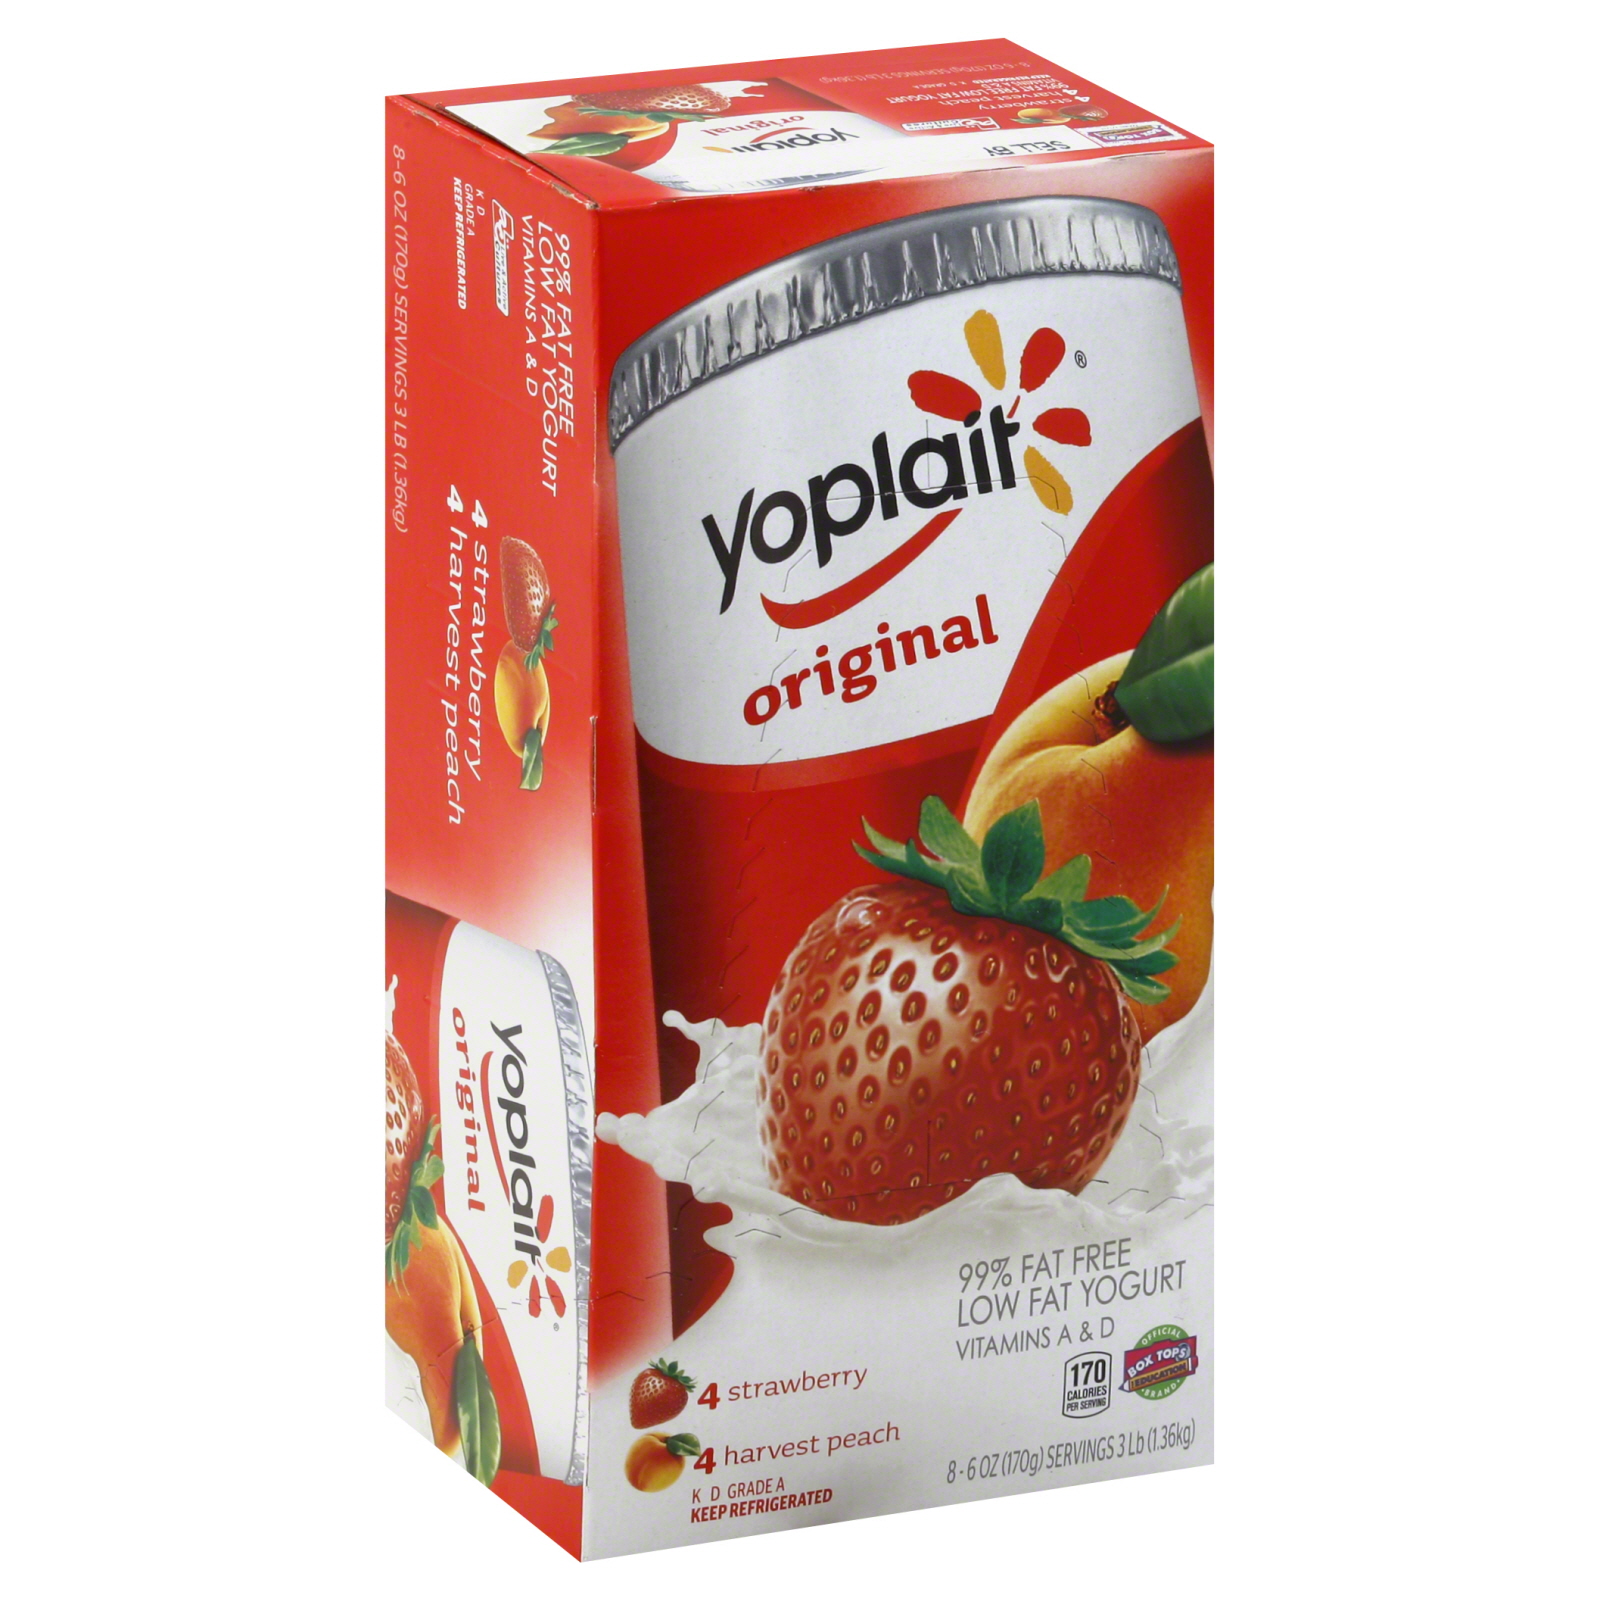 Yoplait Original Lowfat Yogurt, Strawberry, Harvest Peach, 8 - 6 oz (170 g) servings [3 lb (1.36 kg)]